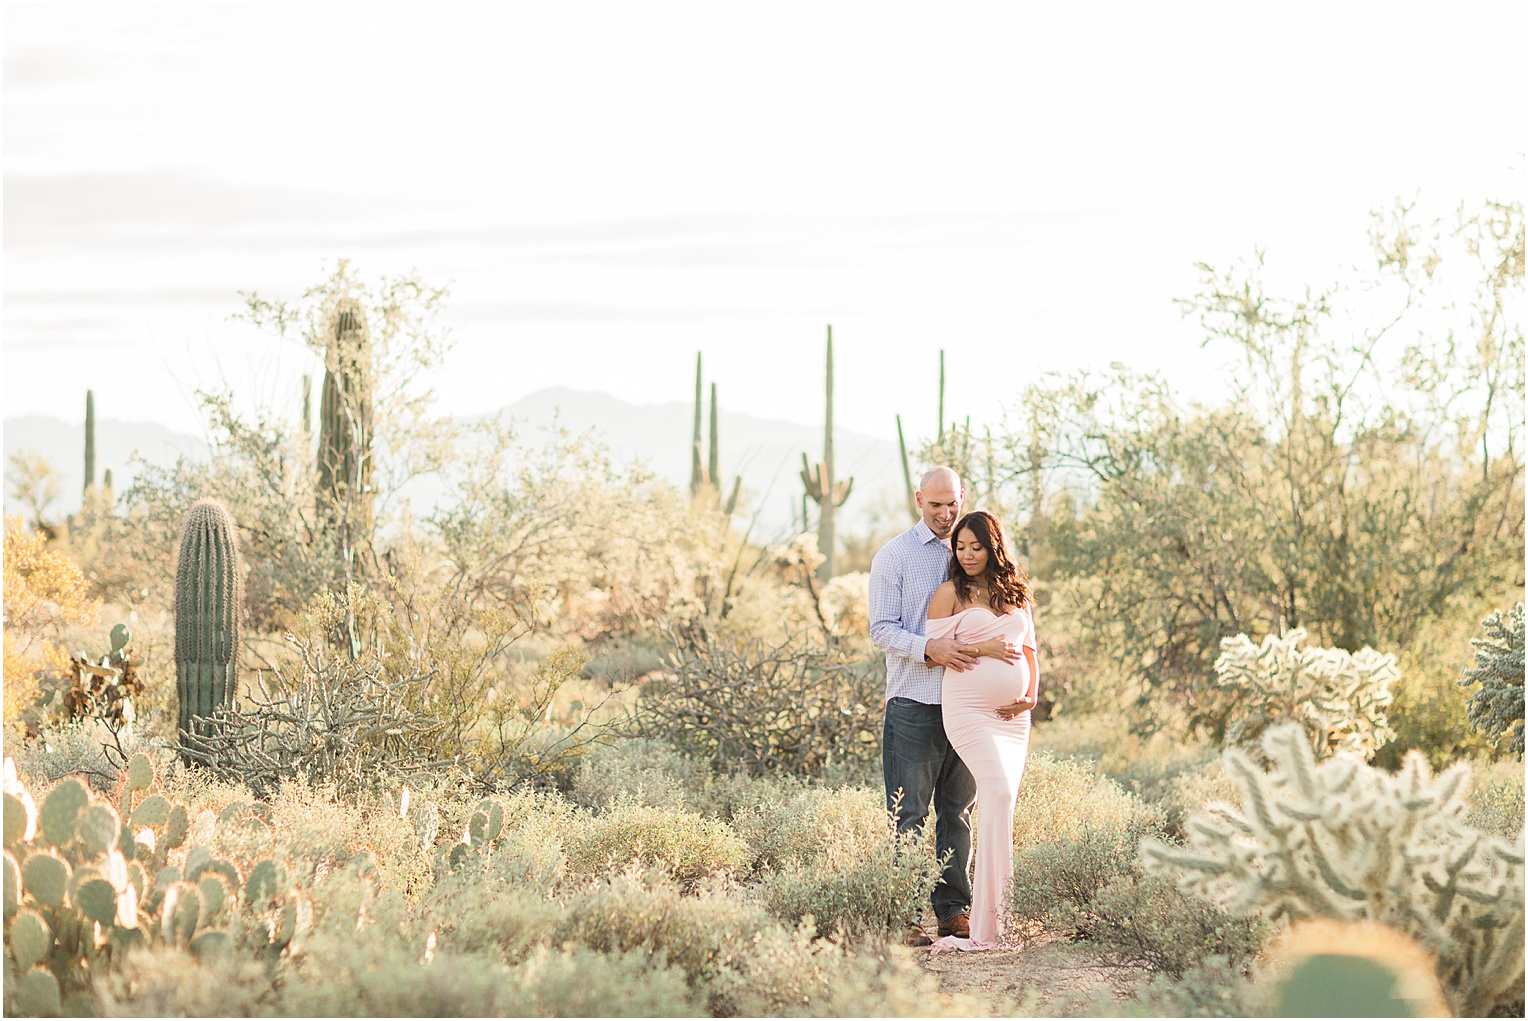 Tucson Maternity Pictures Tucscon AZ Melissa + Matt romantic sunset desert maternity photos with blush and floral maternity dress